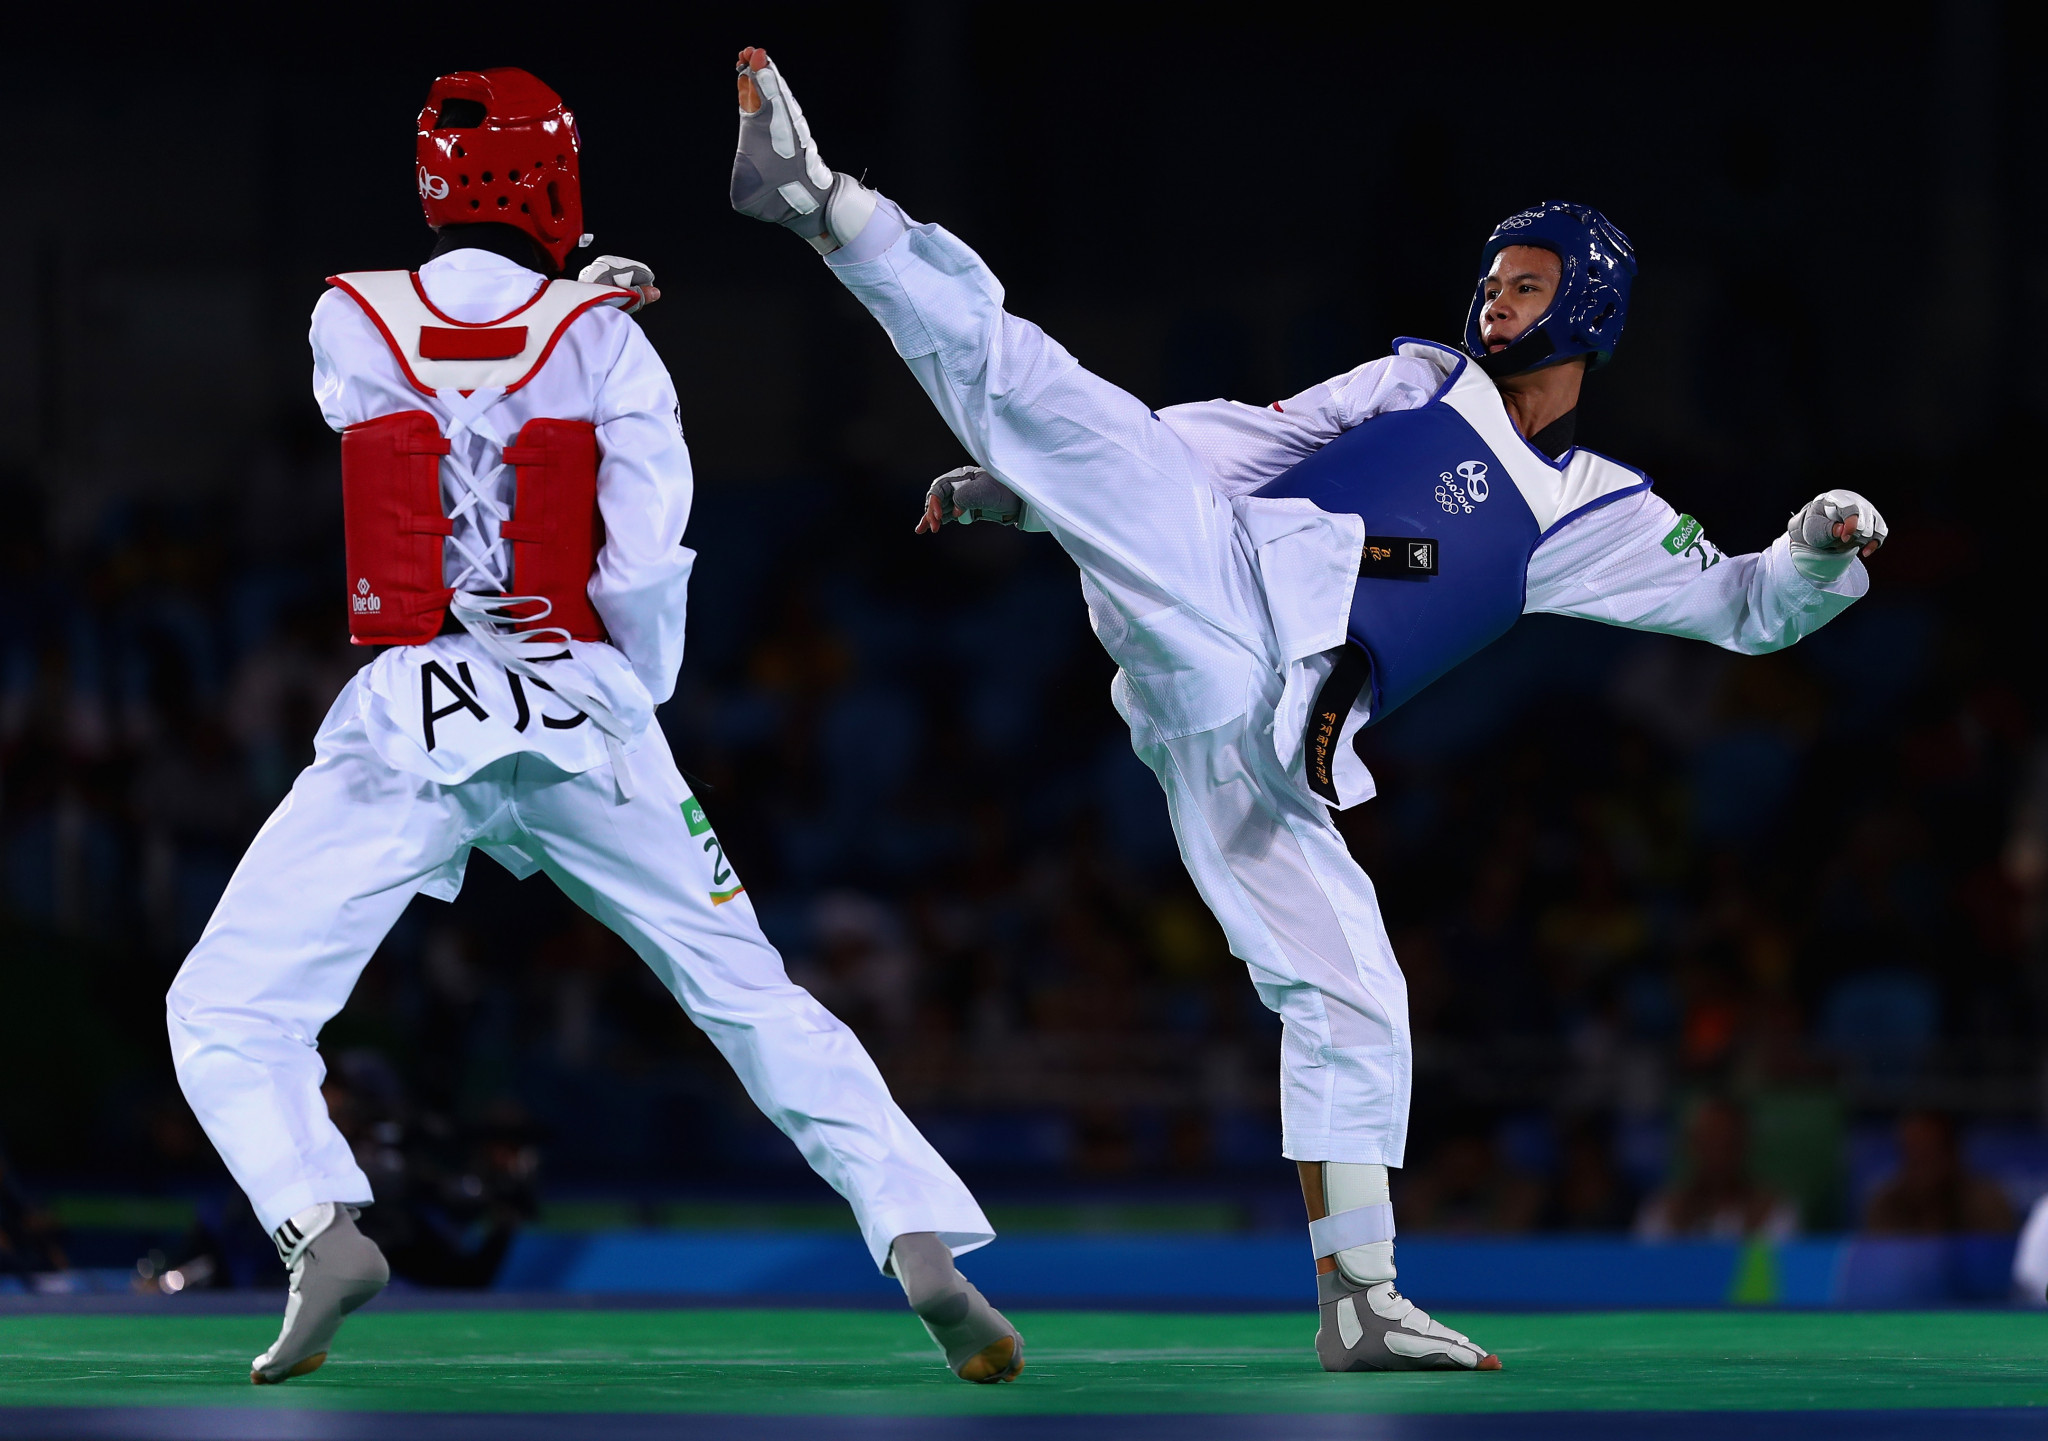 Australia sent four taekwondo athletes to the last Summer Olympics in Rio de Janeiro in 2016 ©Getty Images